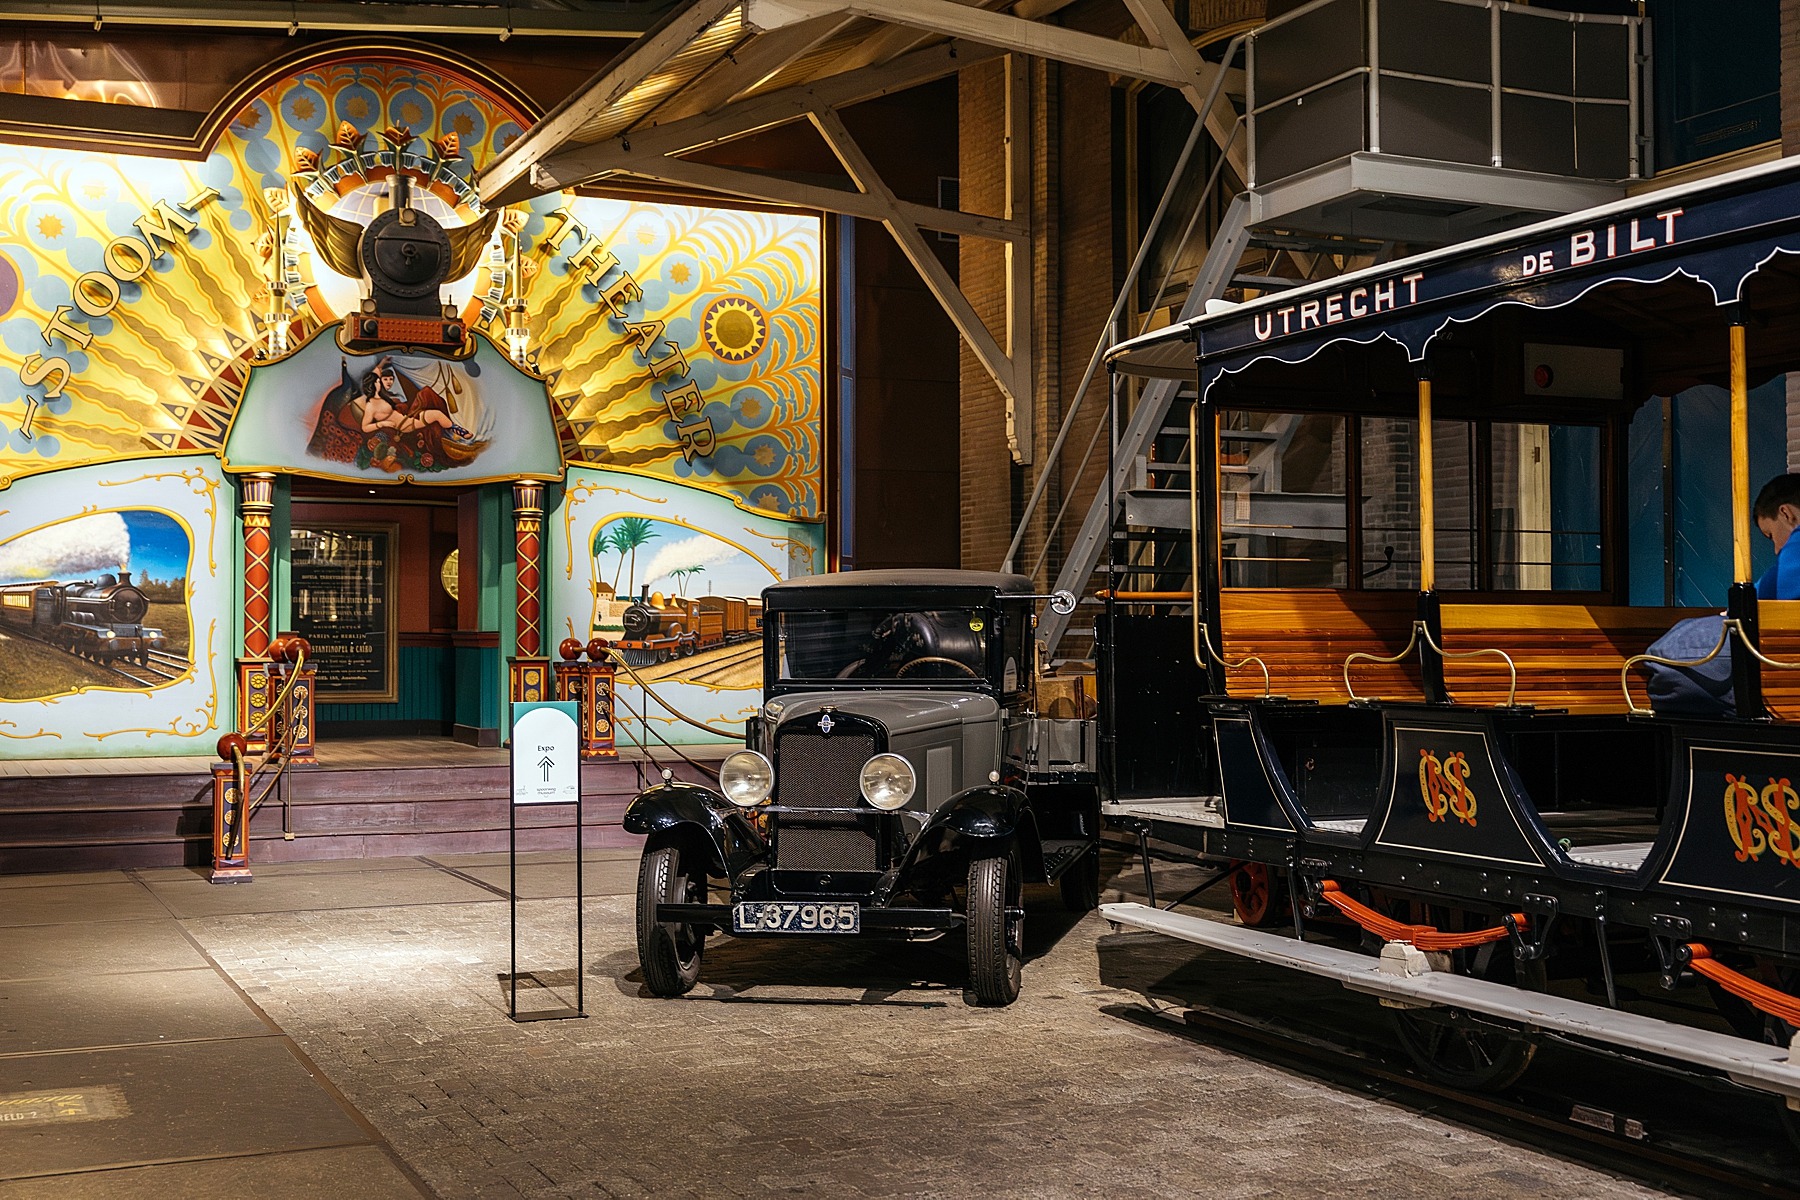 Spoorwegmuseum, l'incroyable musée du train de Utrecht 76